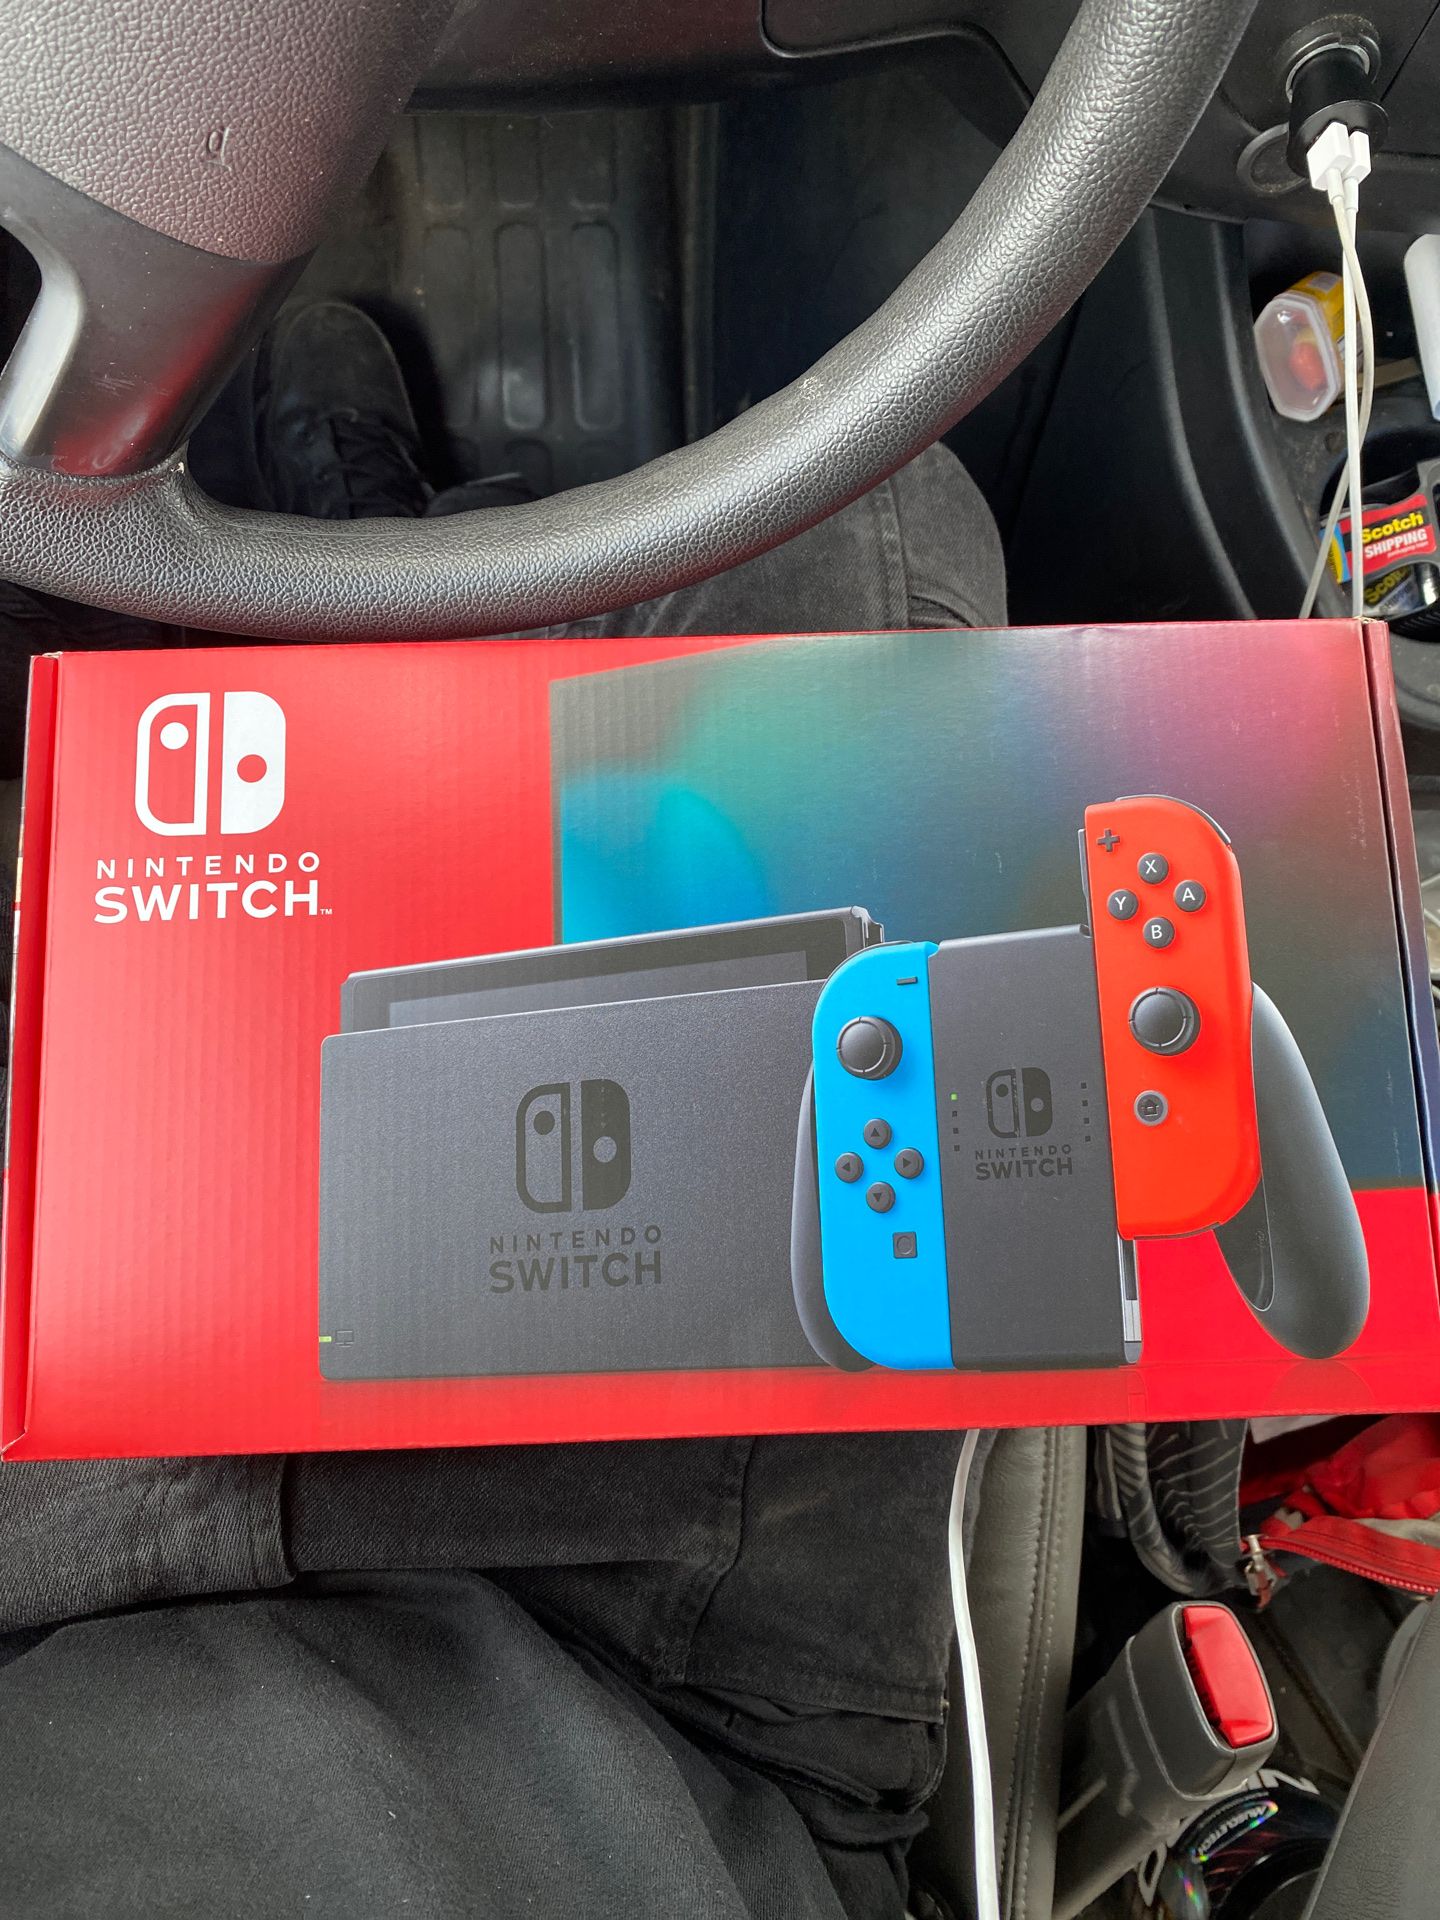 Nintendo Switch “NEWEST MODEL” red/blue joycon